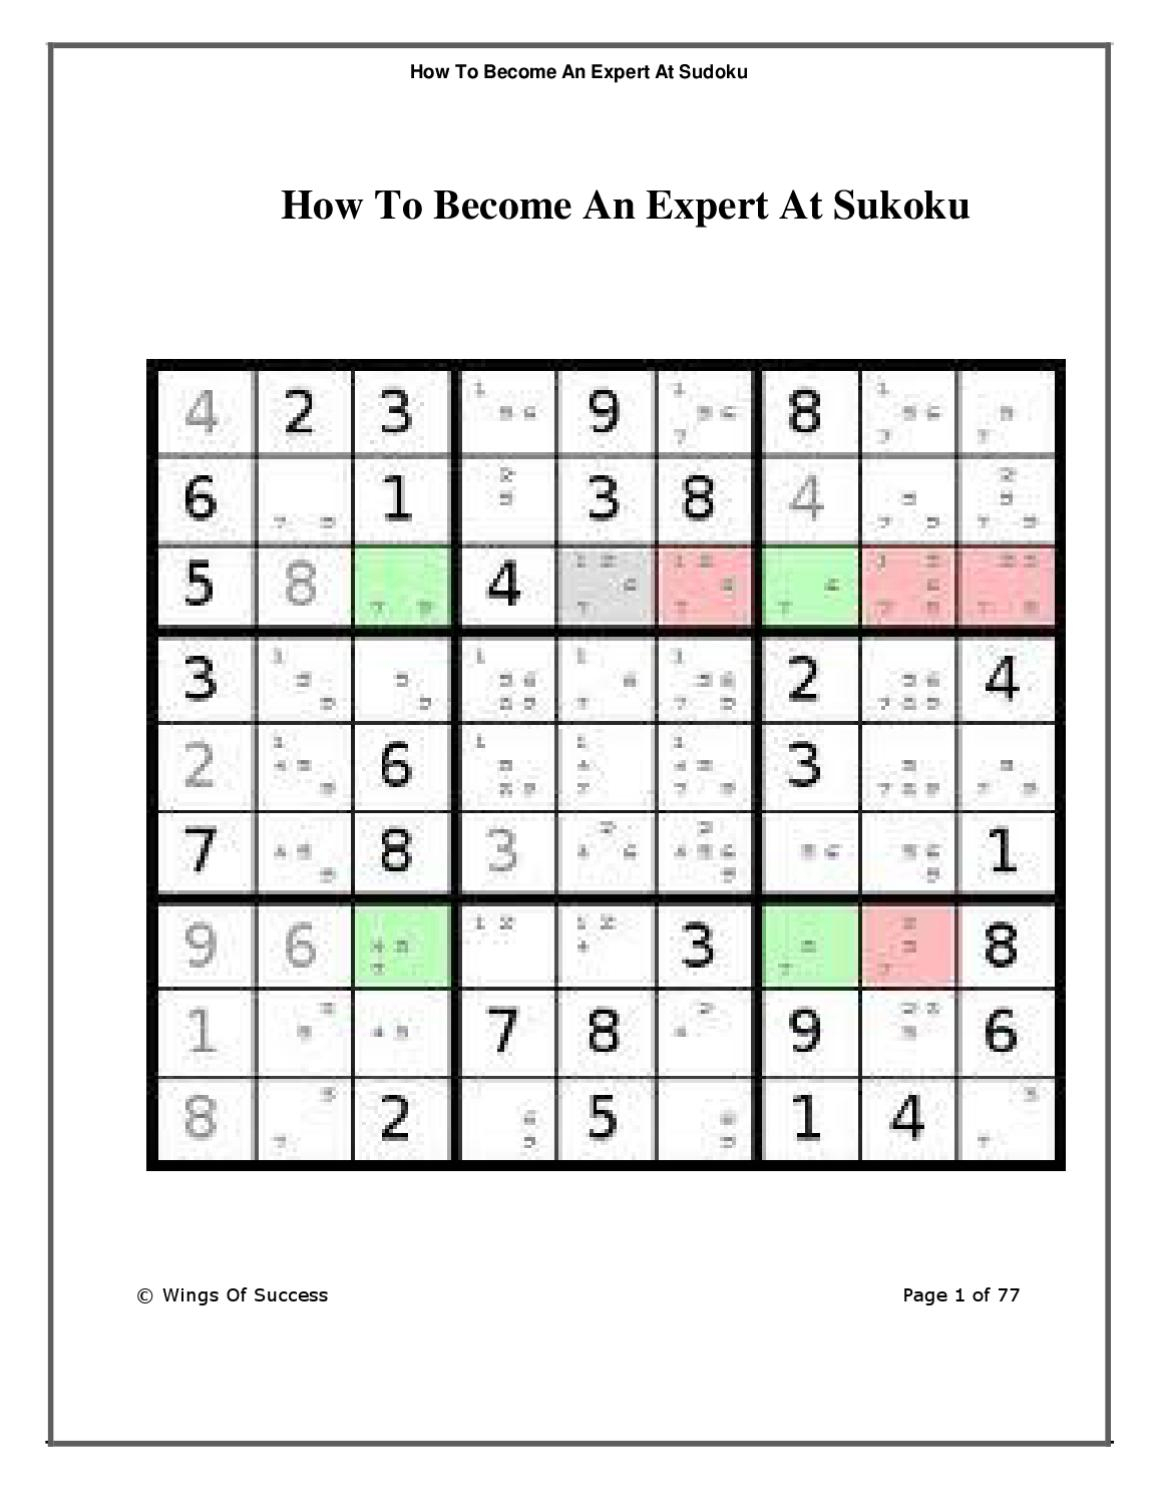 How To Win At Sudokubecky White - Issuu